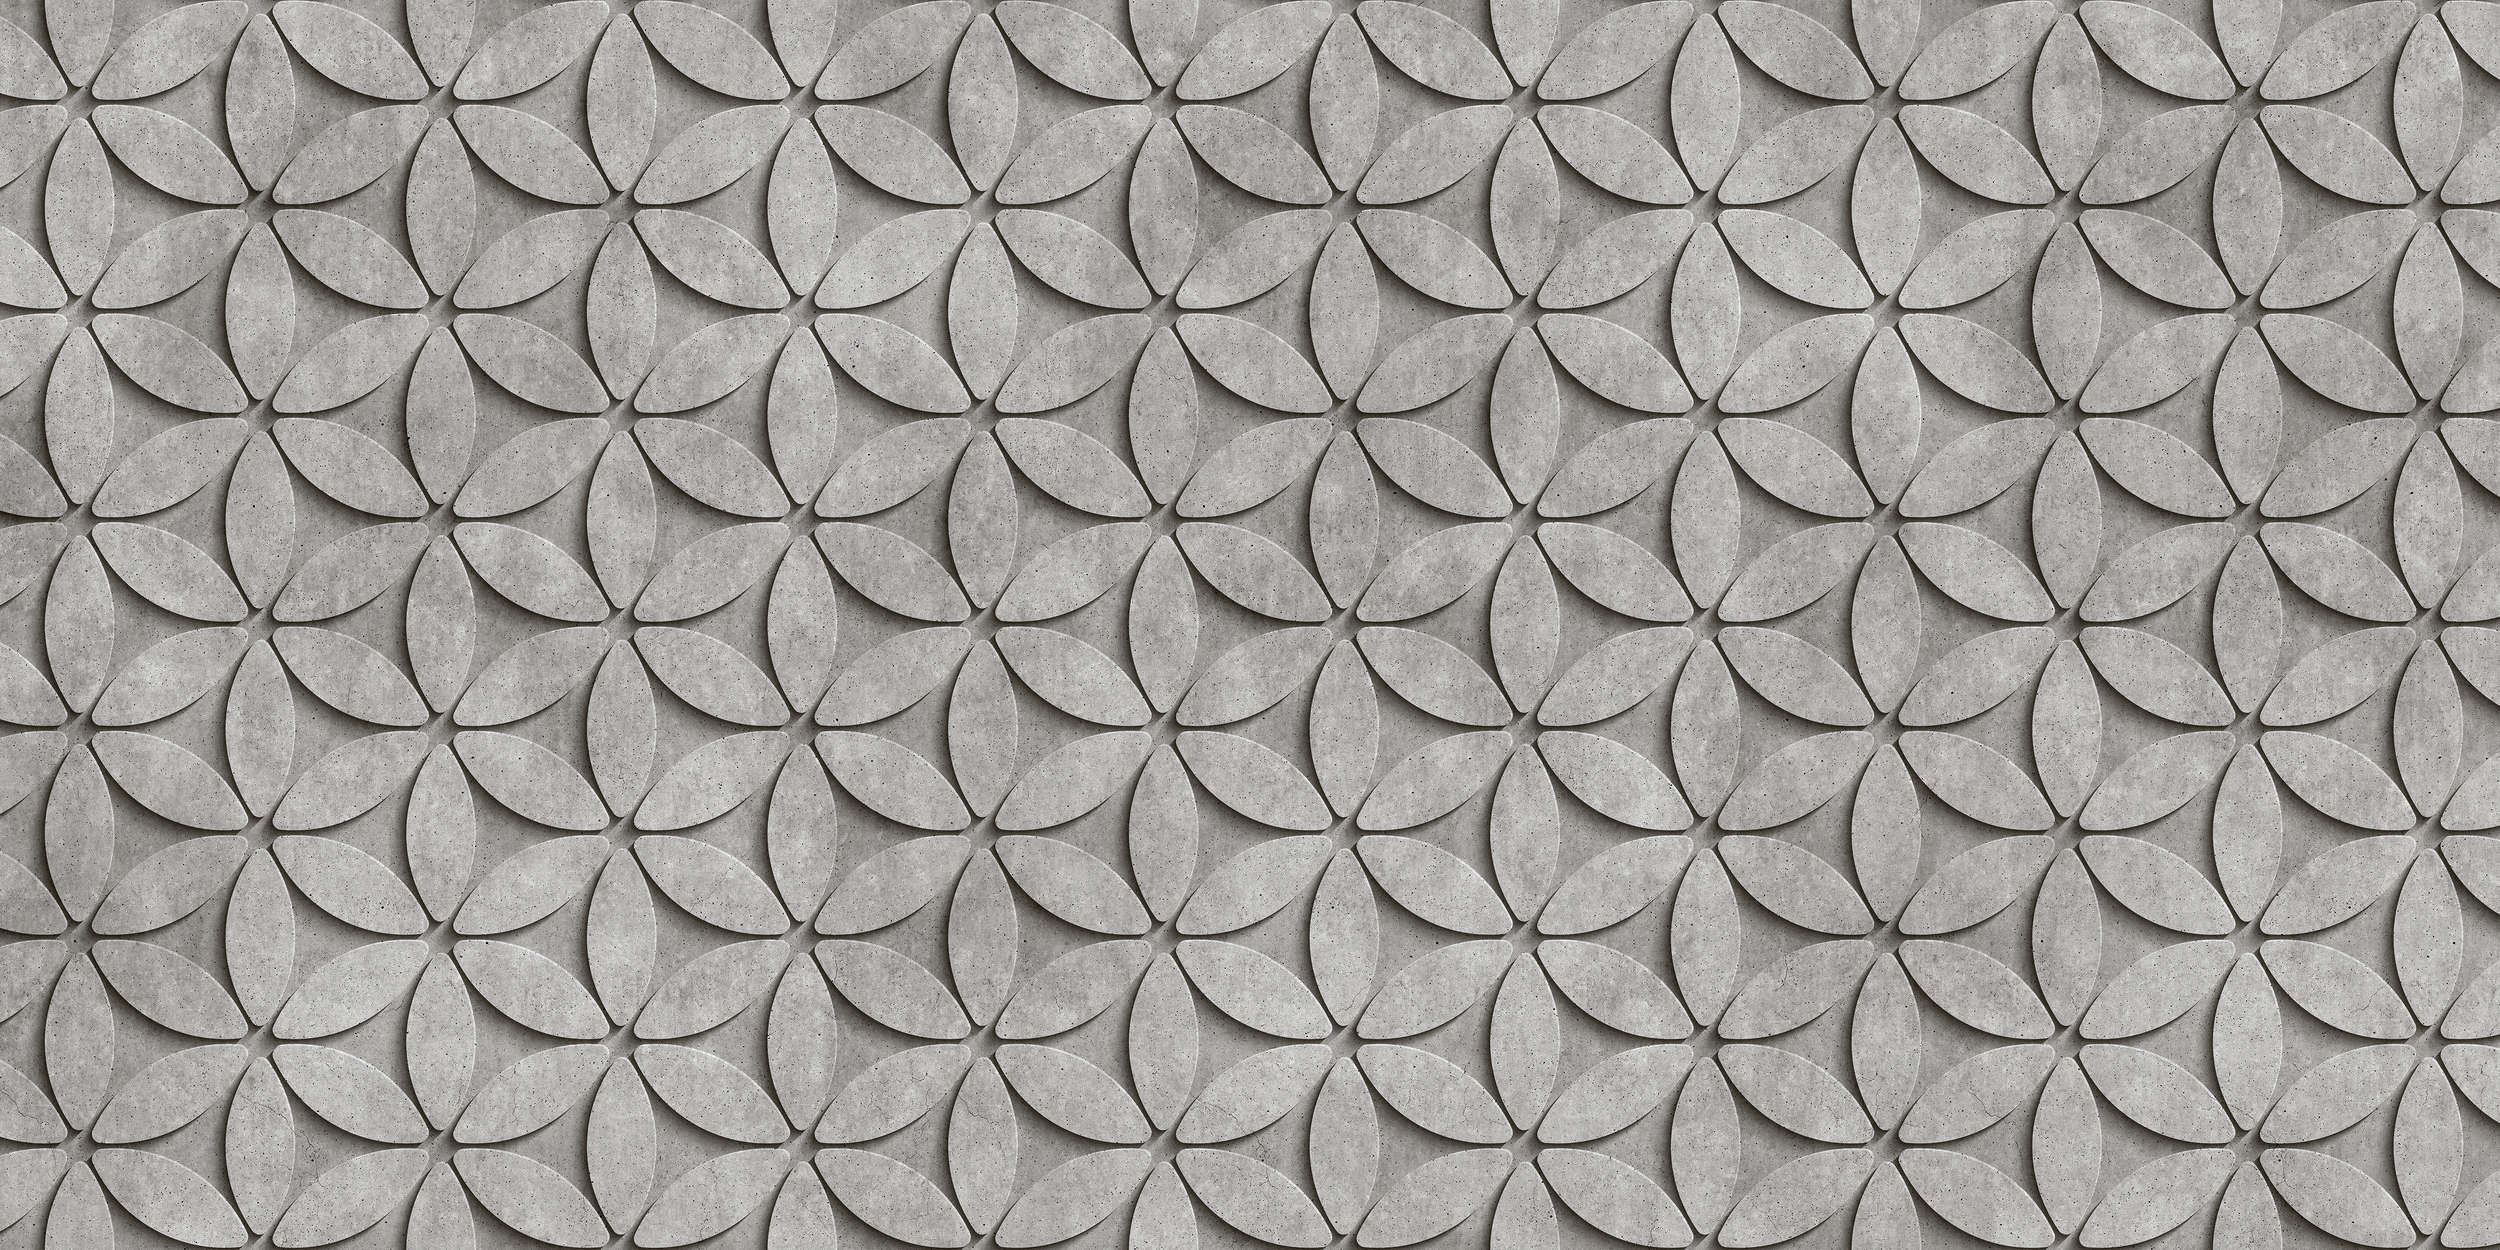             Azulejo 1 - Papel Pintado Polígonos de Hormigón 3D - Gris, Negro | Premium Smooth Fleece
        